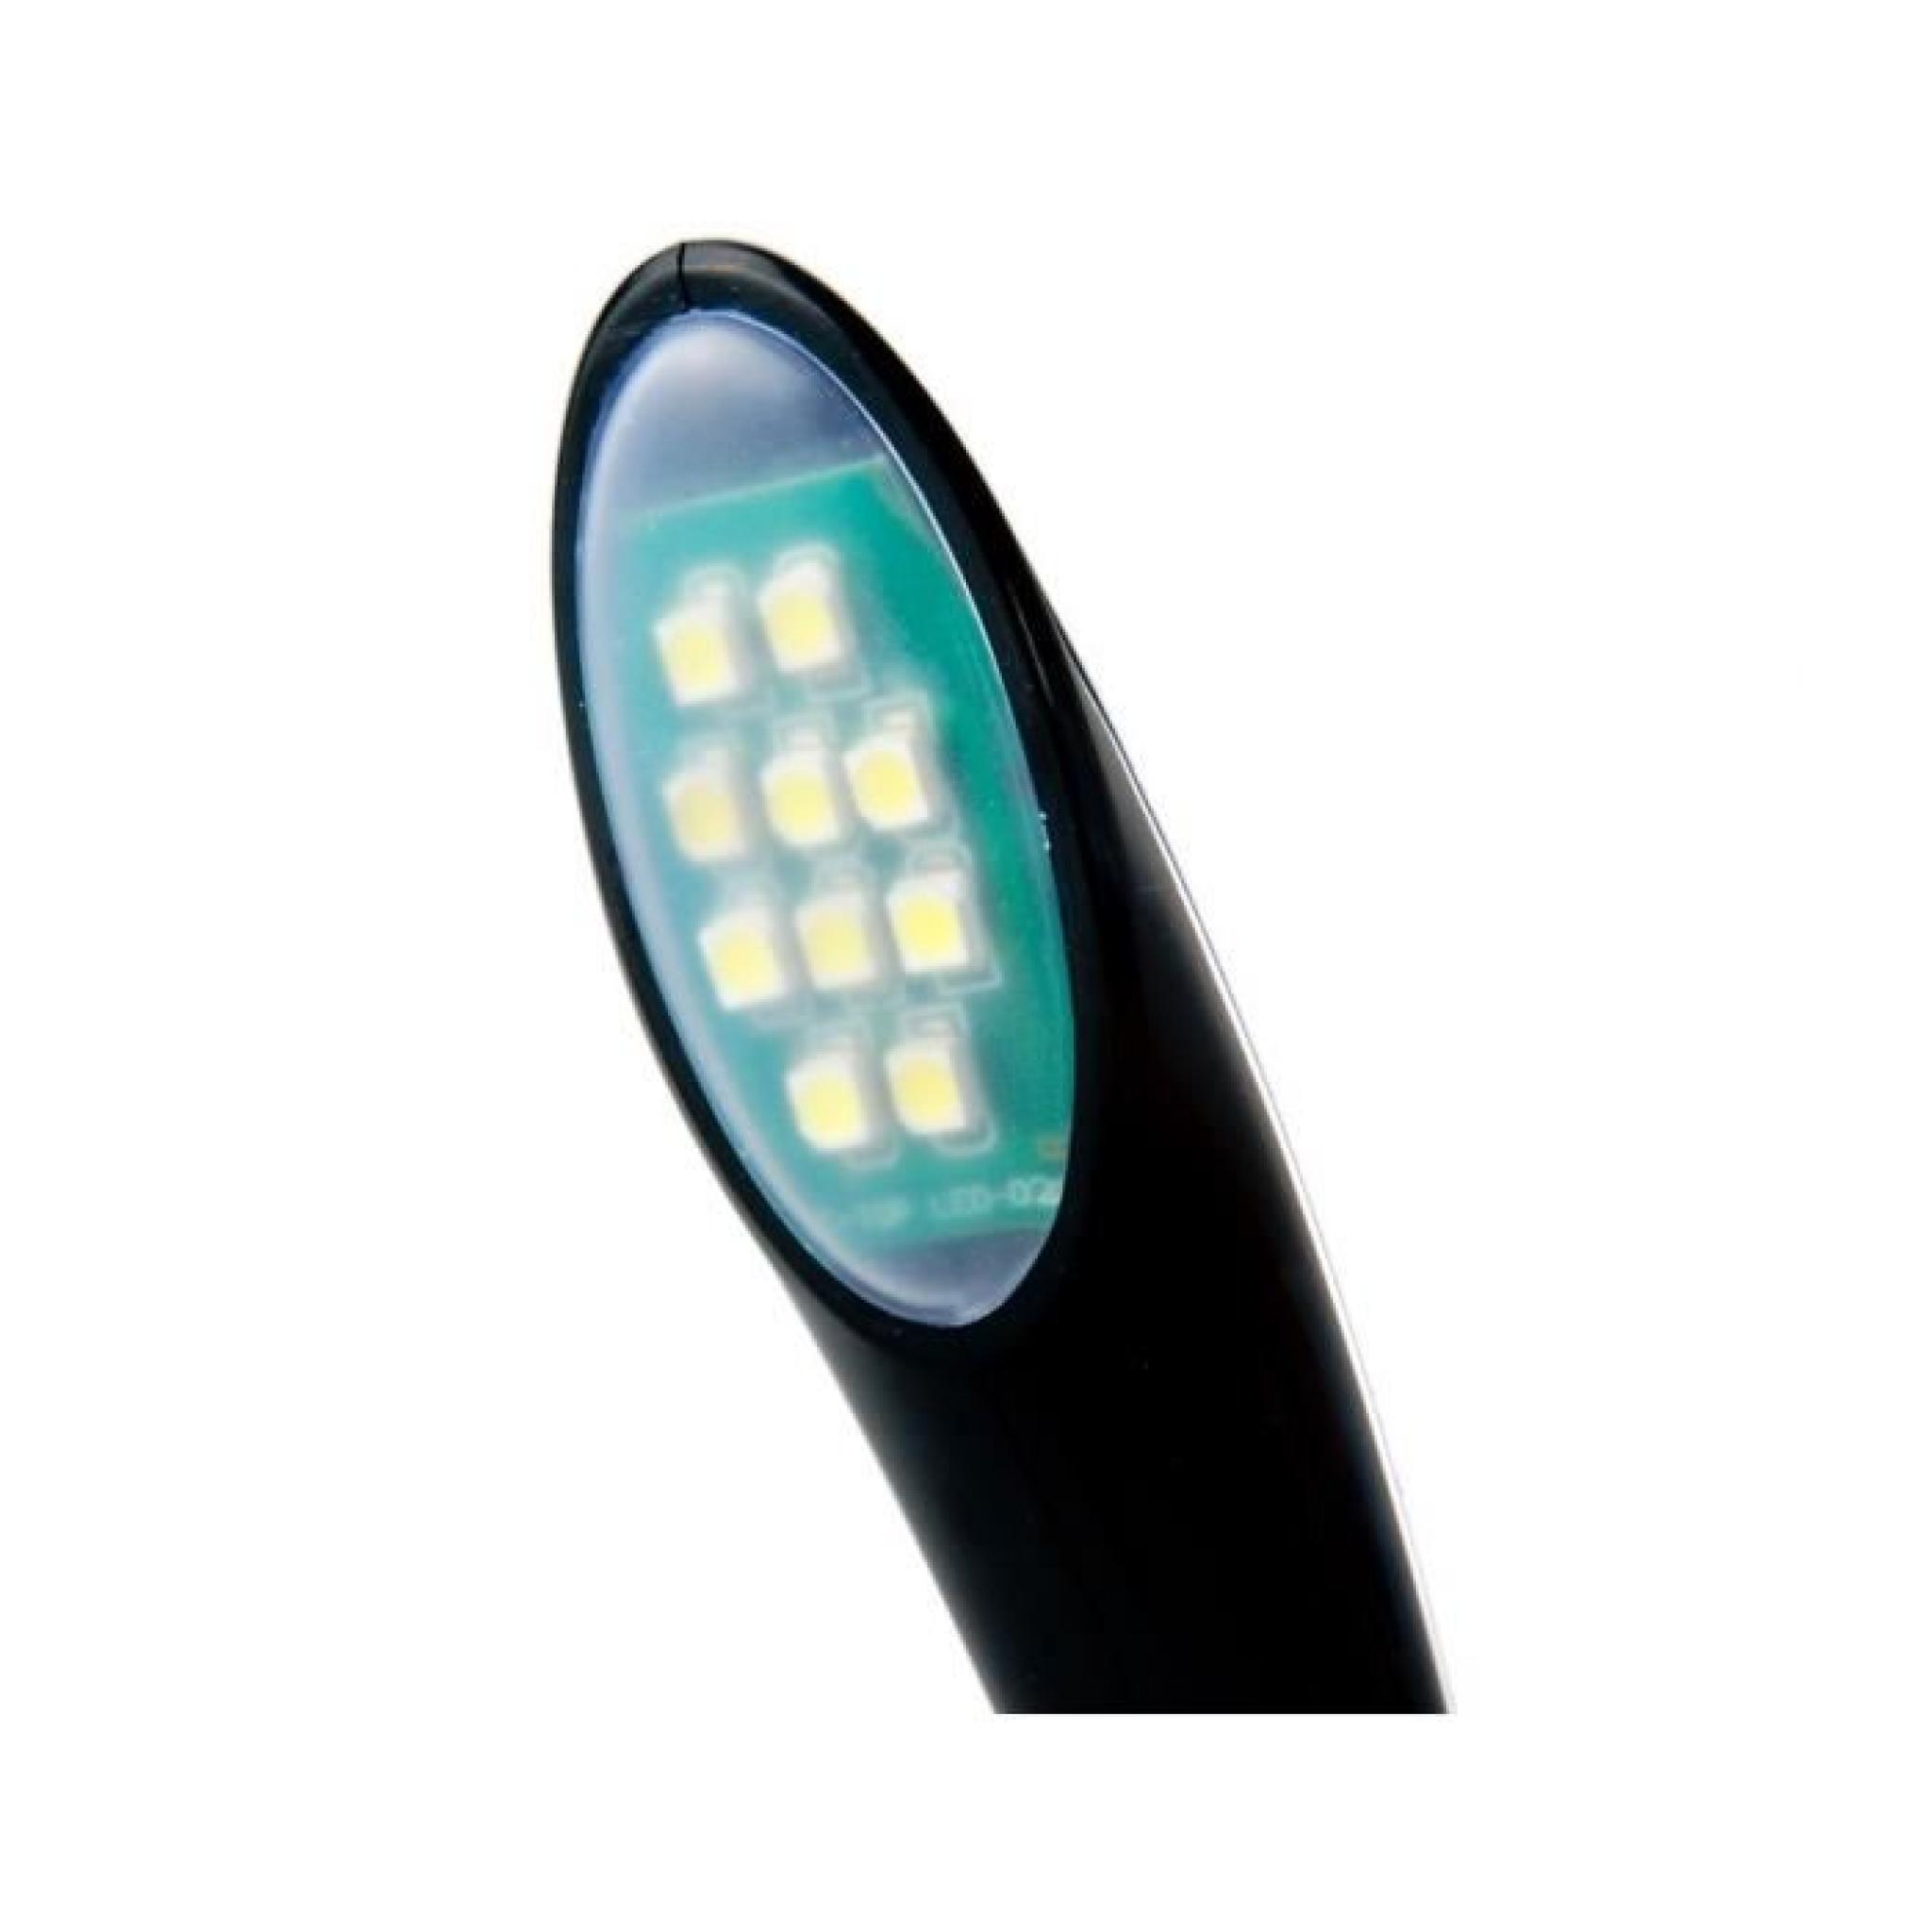 Mini USB 10 LED réglable Lampe tactile pour ord… pas cher